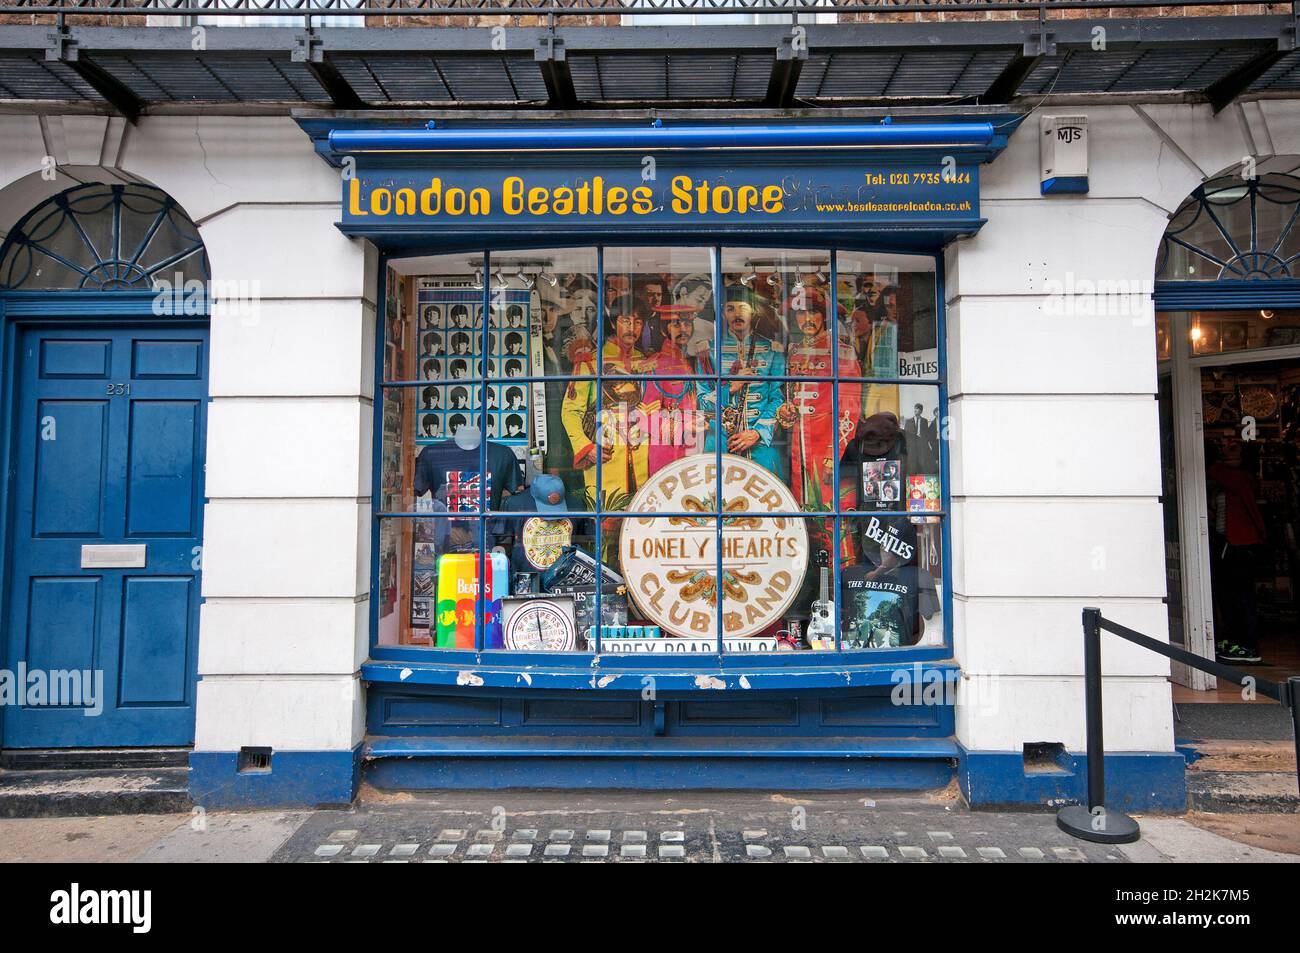 London Beatles Store in Baker Street, London, England Stock Photo